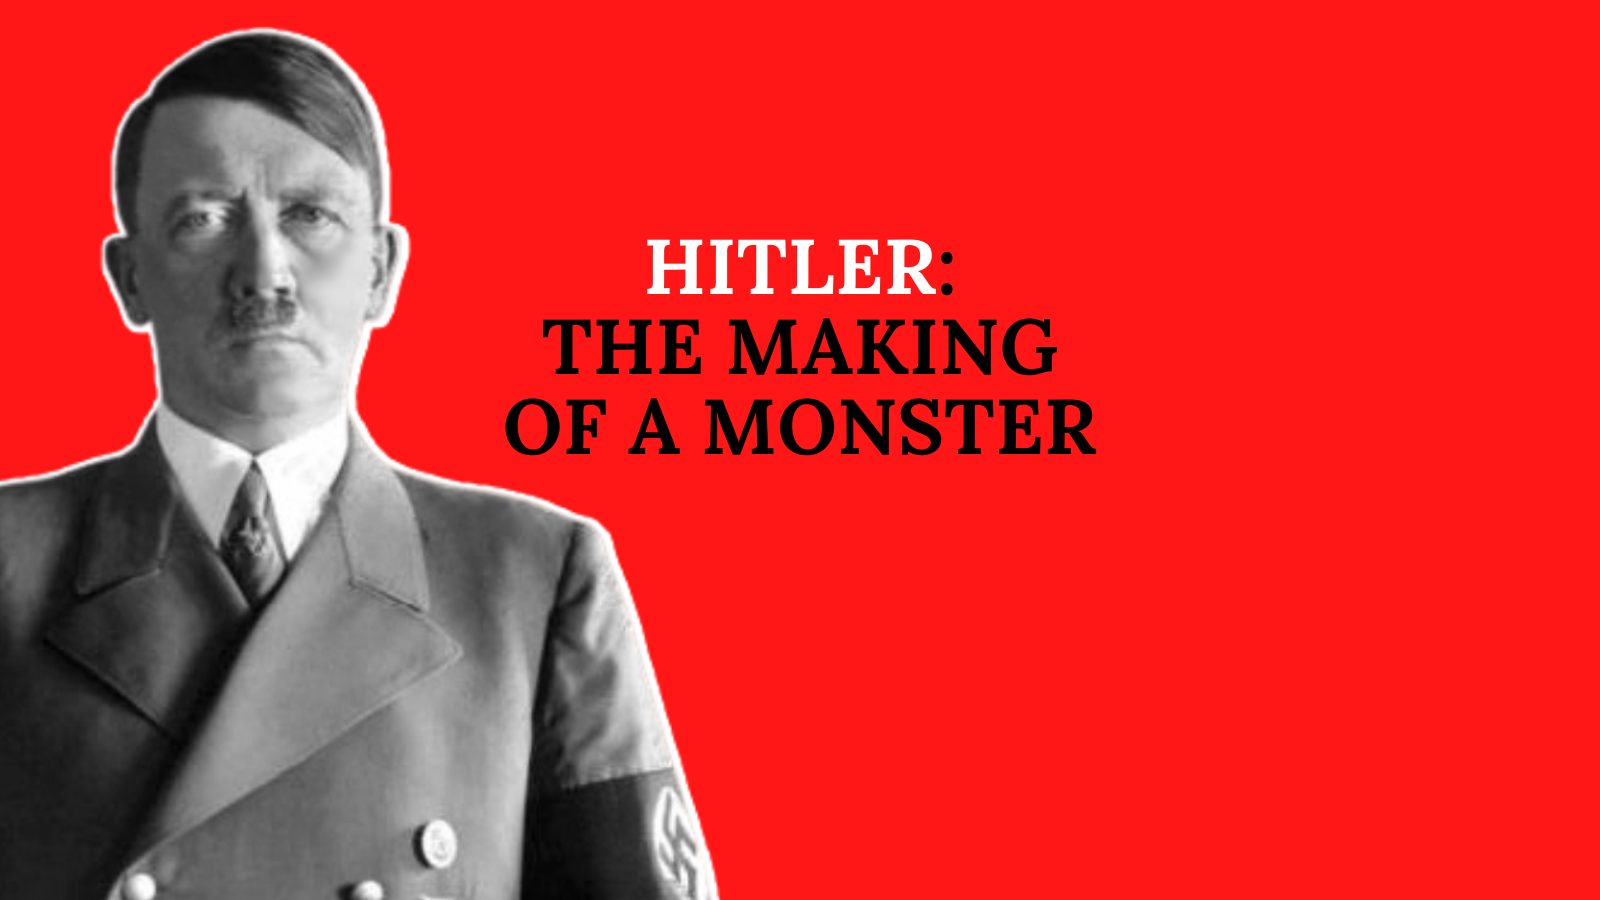 Hitler the making of a monster